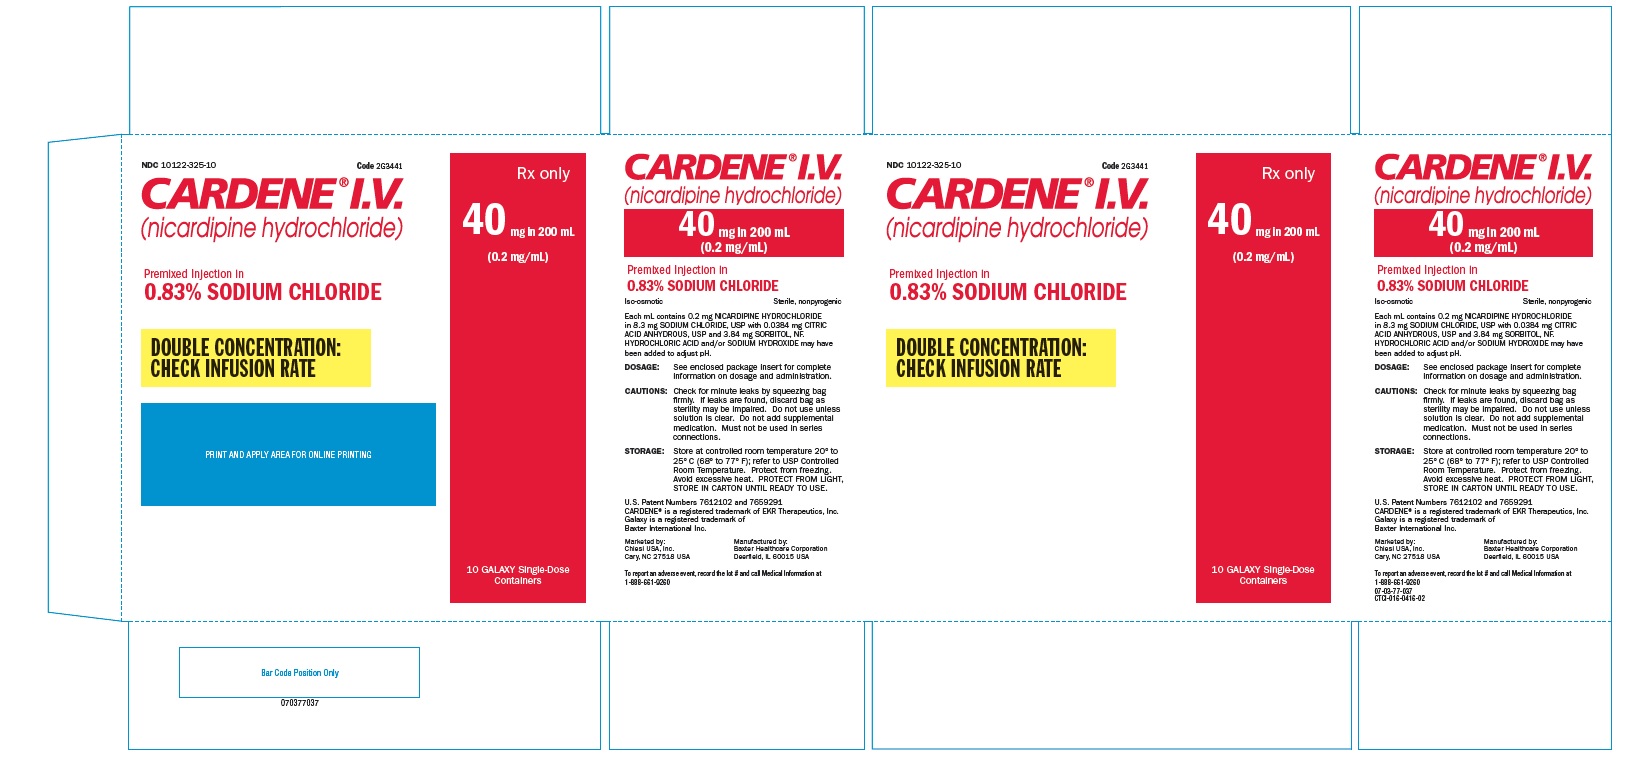 Cardene IV 0.2 mg/mL in 0.83% Sodium Chloride